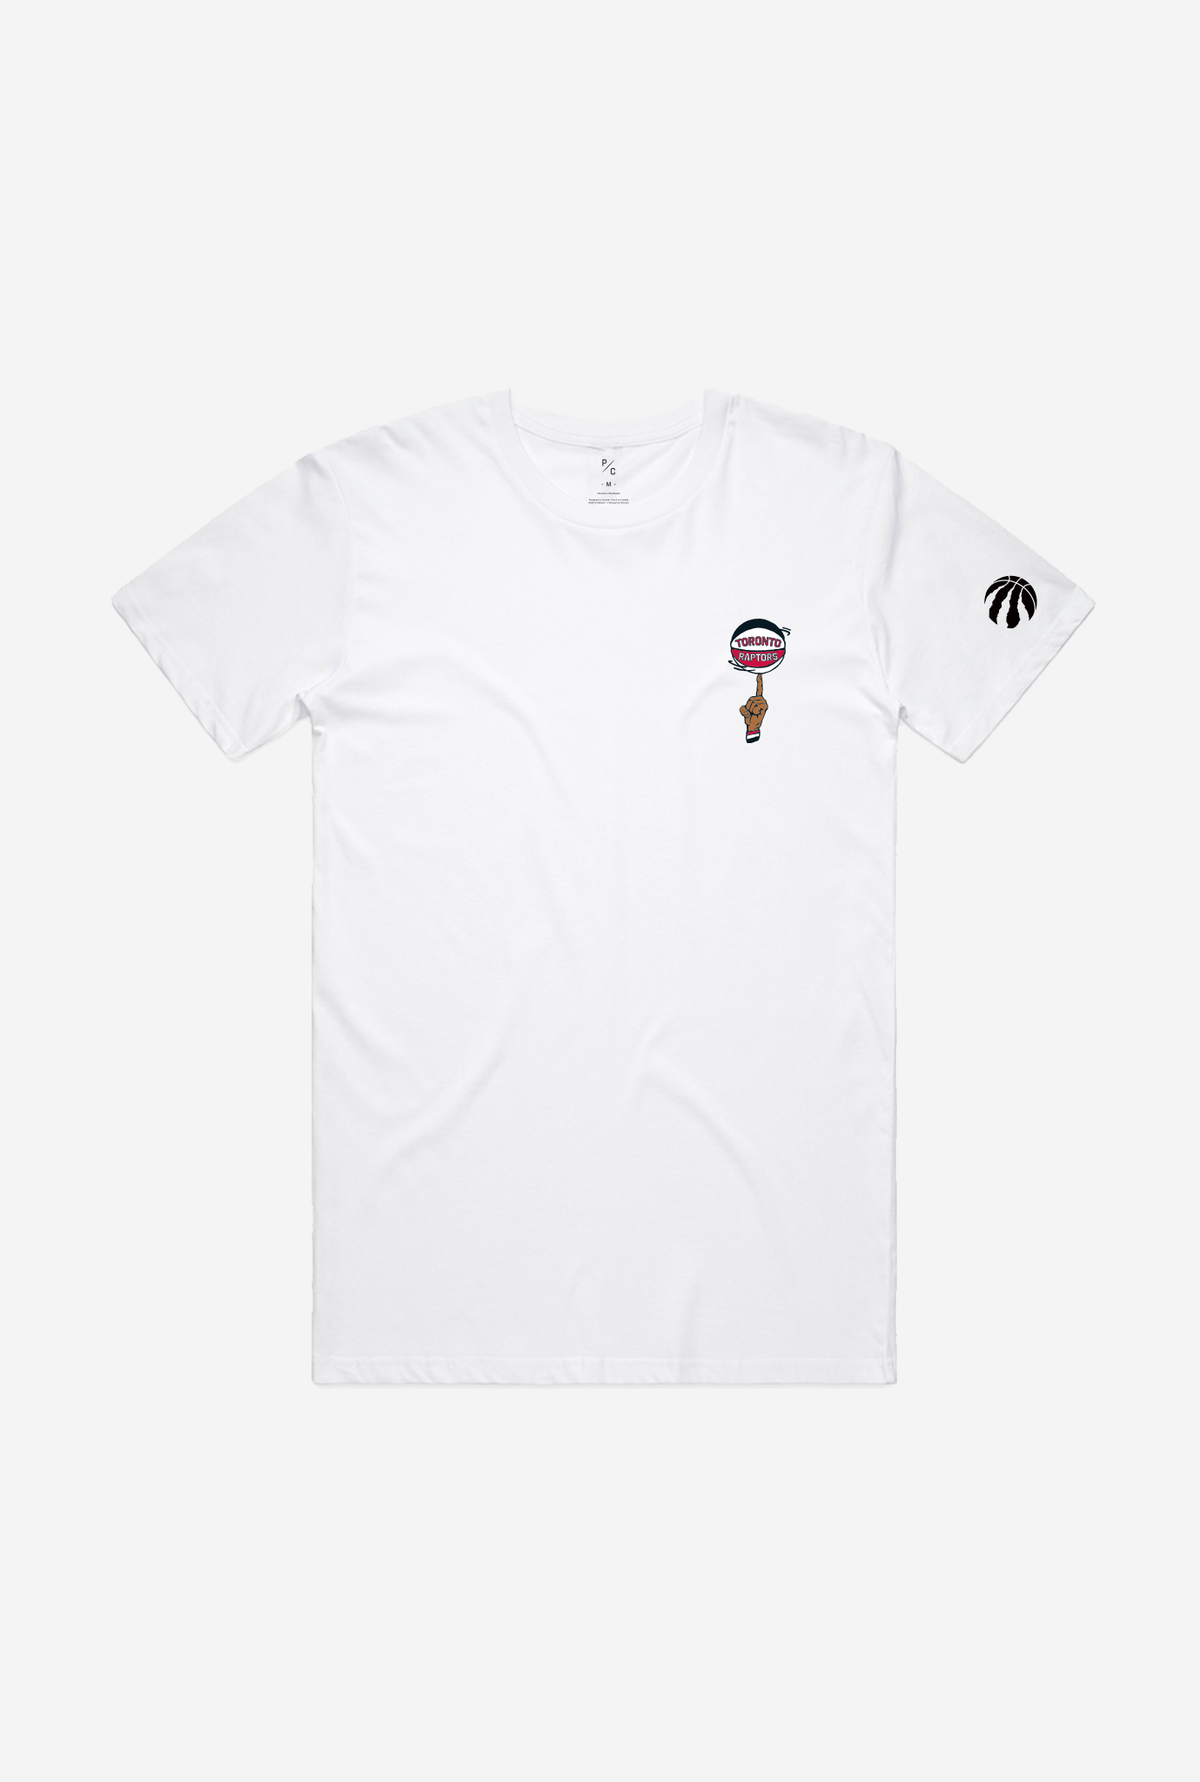 Toronto Raptors Spinning Ball Logo T-Shirt - White